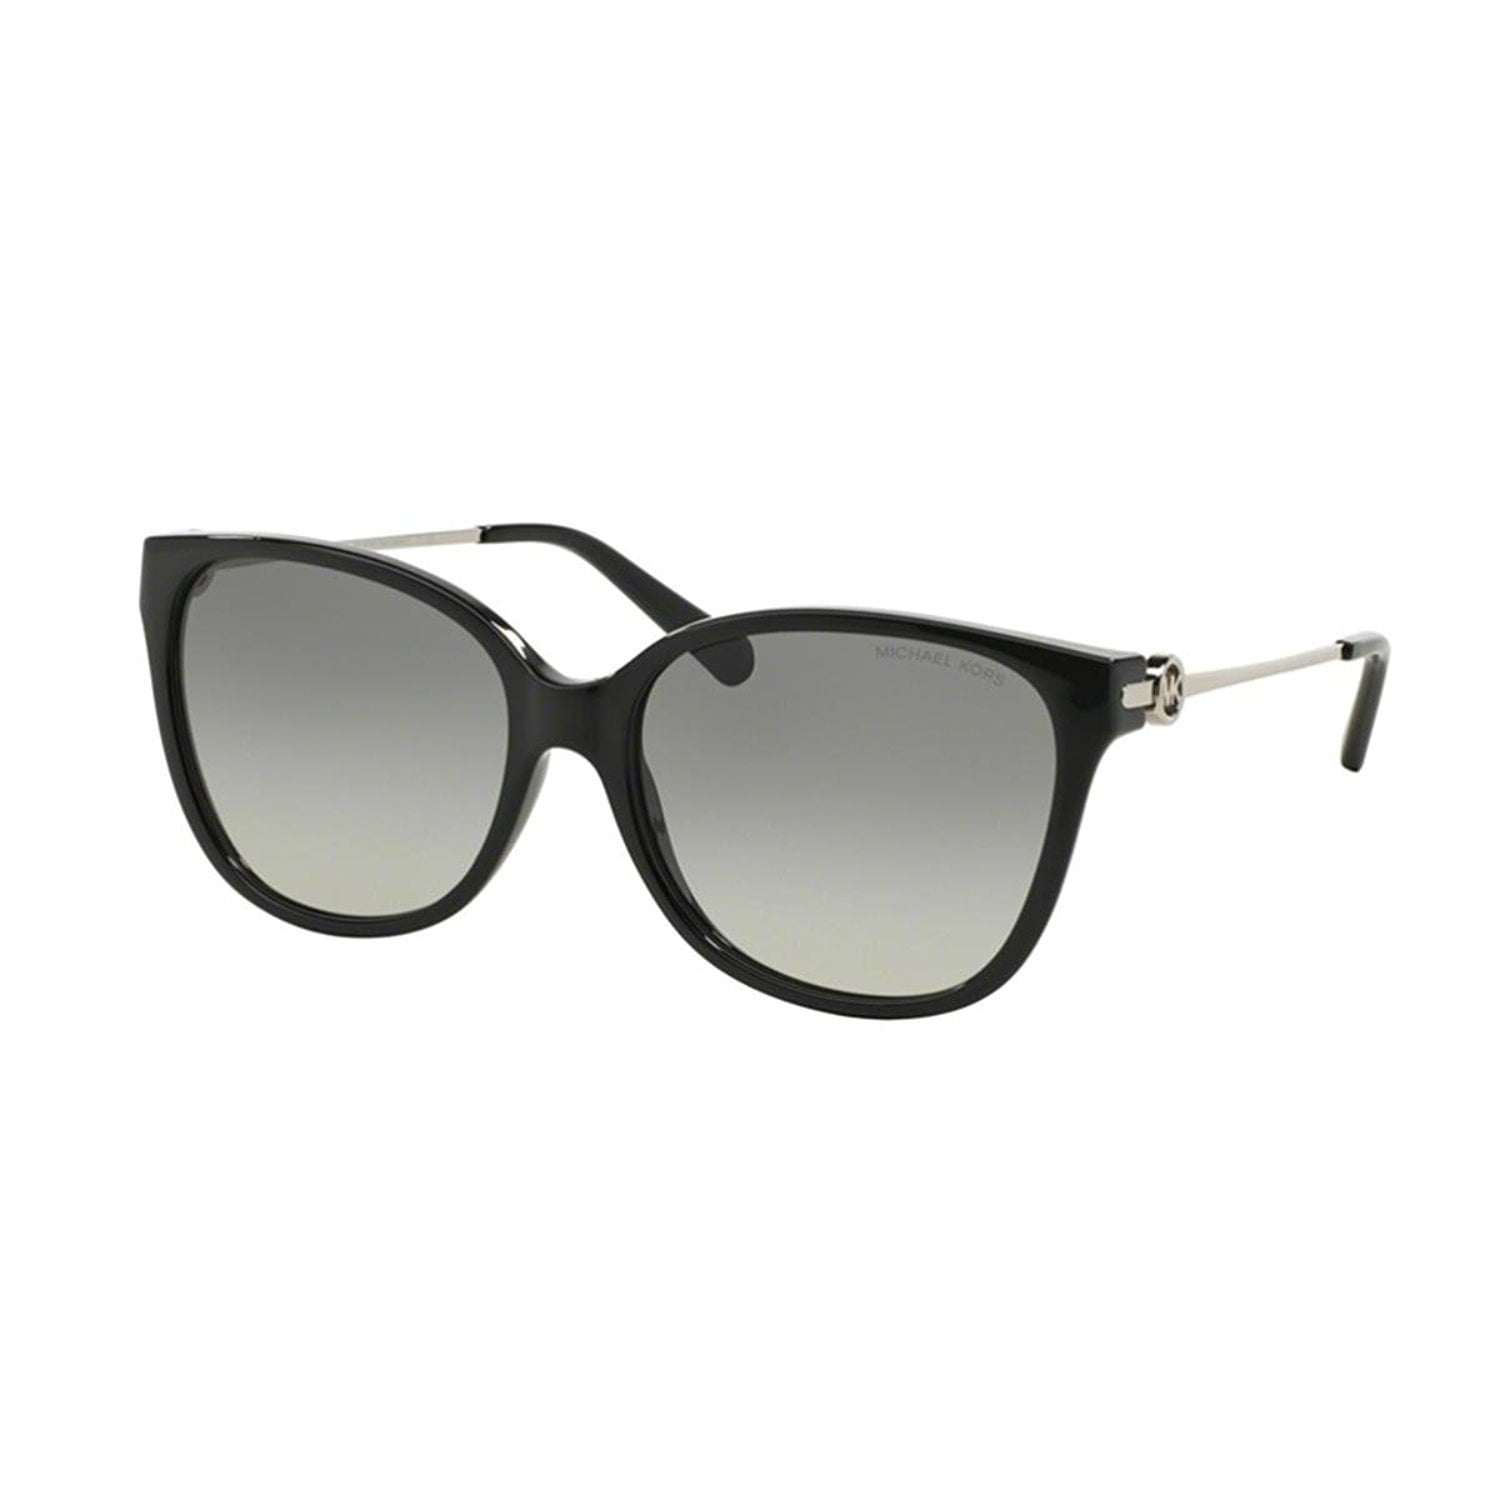 MICHAEL KORS Sunglasses MK 6006 300511 Black 57MM - Walmart.com